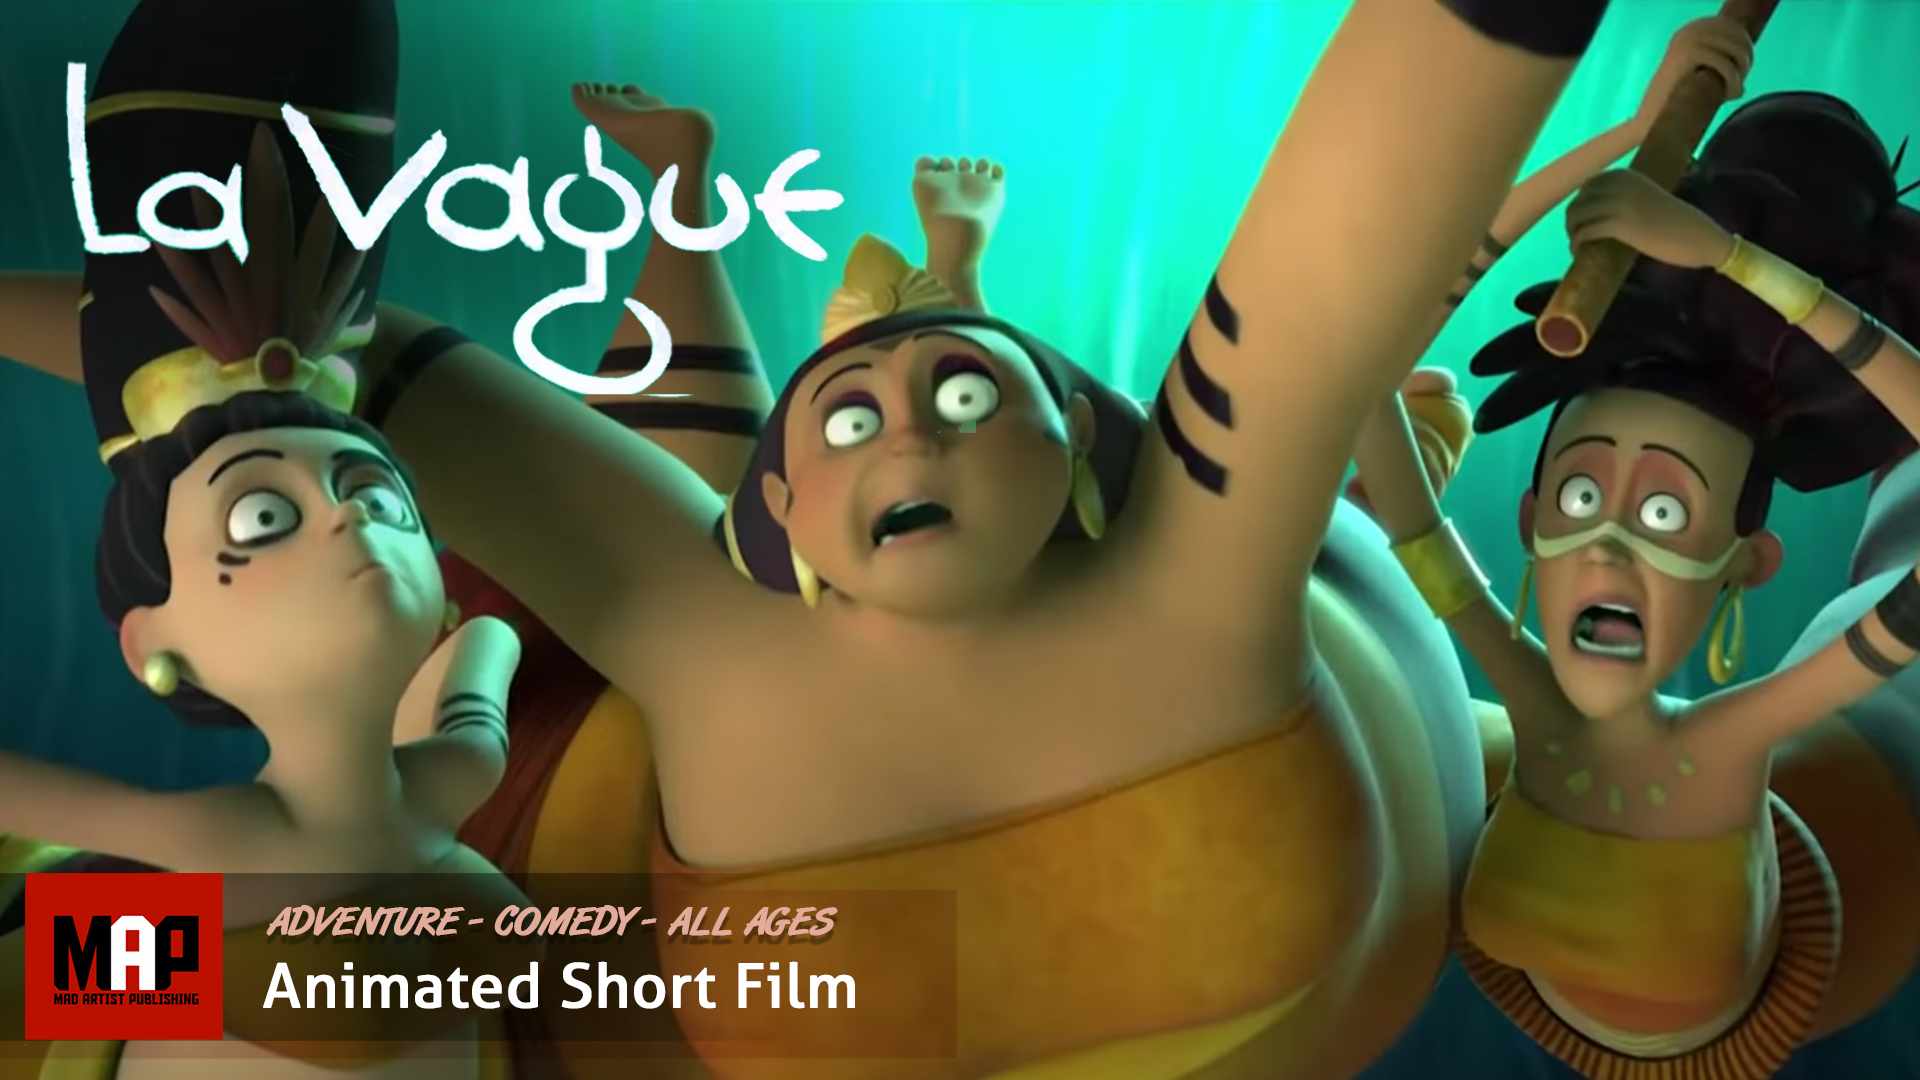 Adventure Fantasy CGI 3d Animated Short Film ** THE WAVE / LA VAGUE ** Funny Kids Animation by ESMA